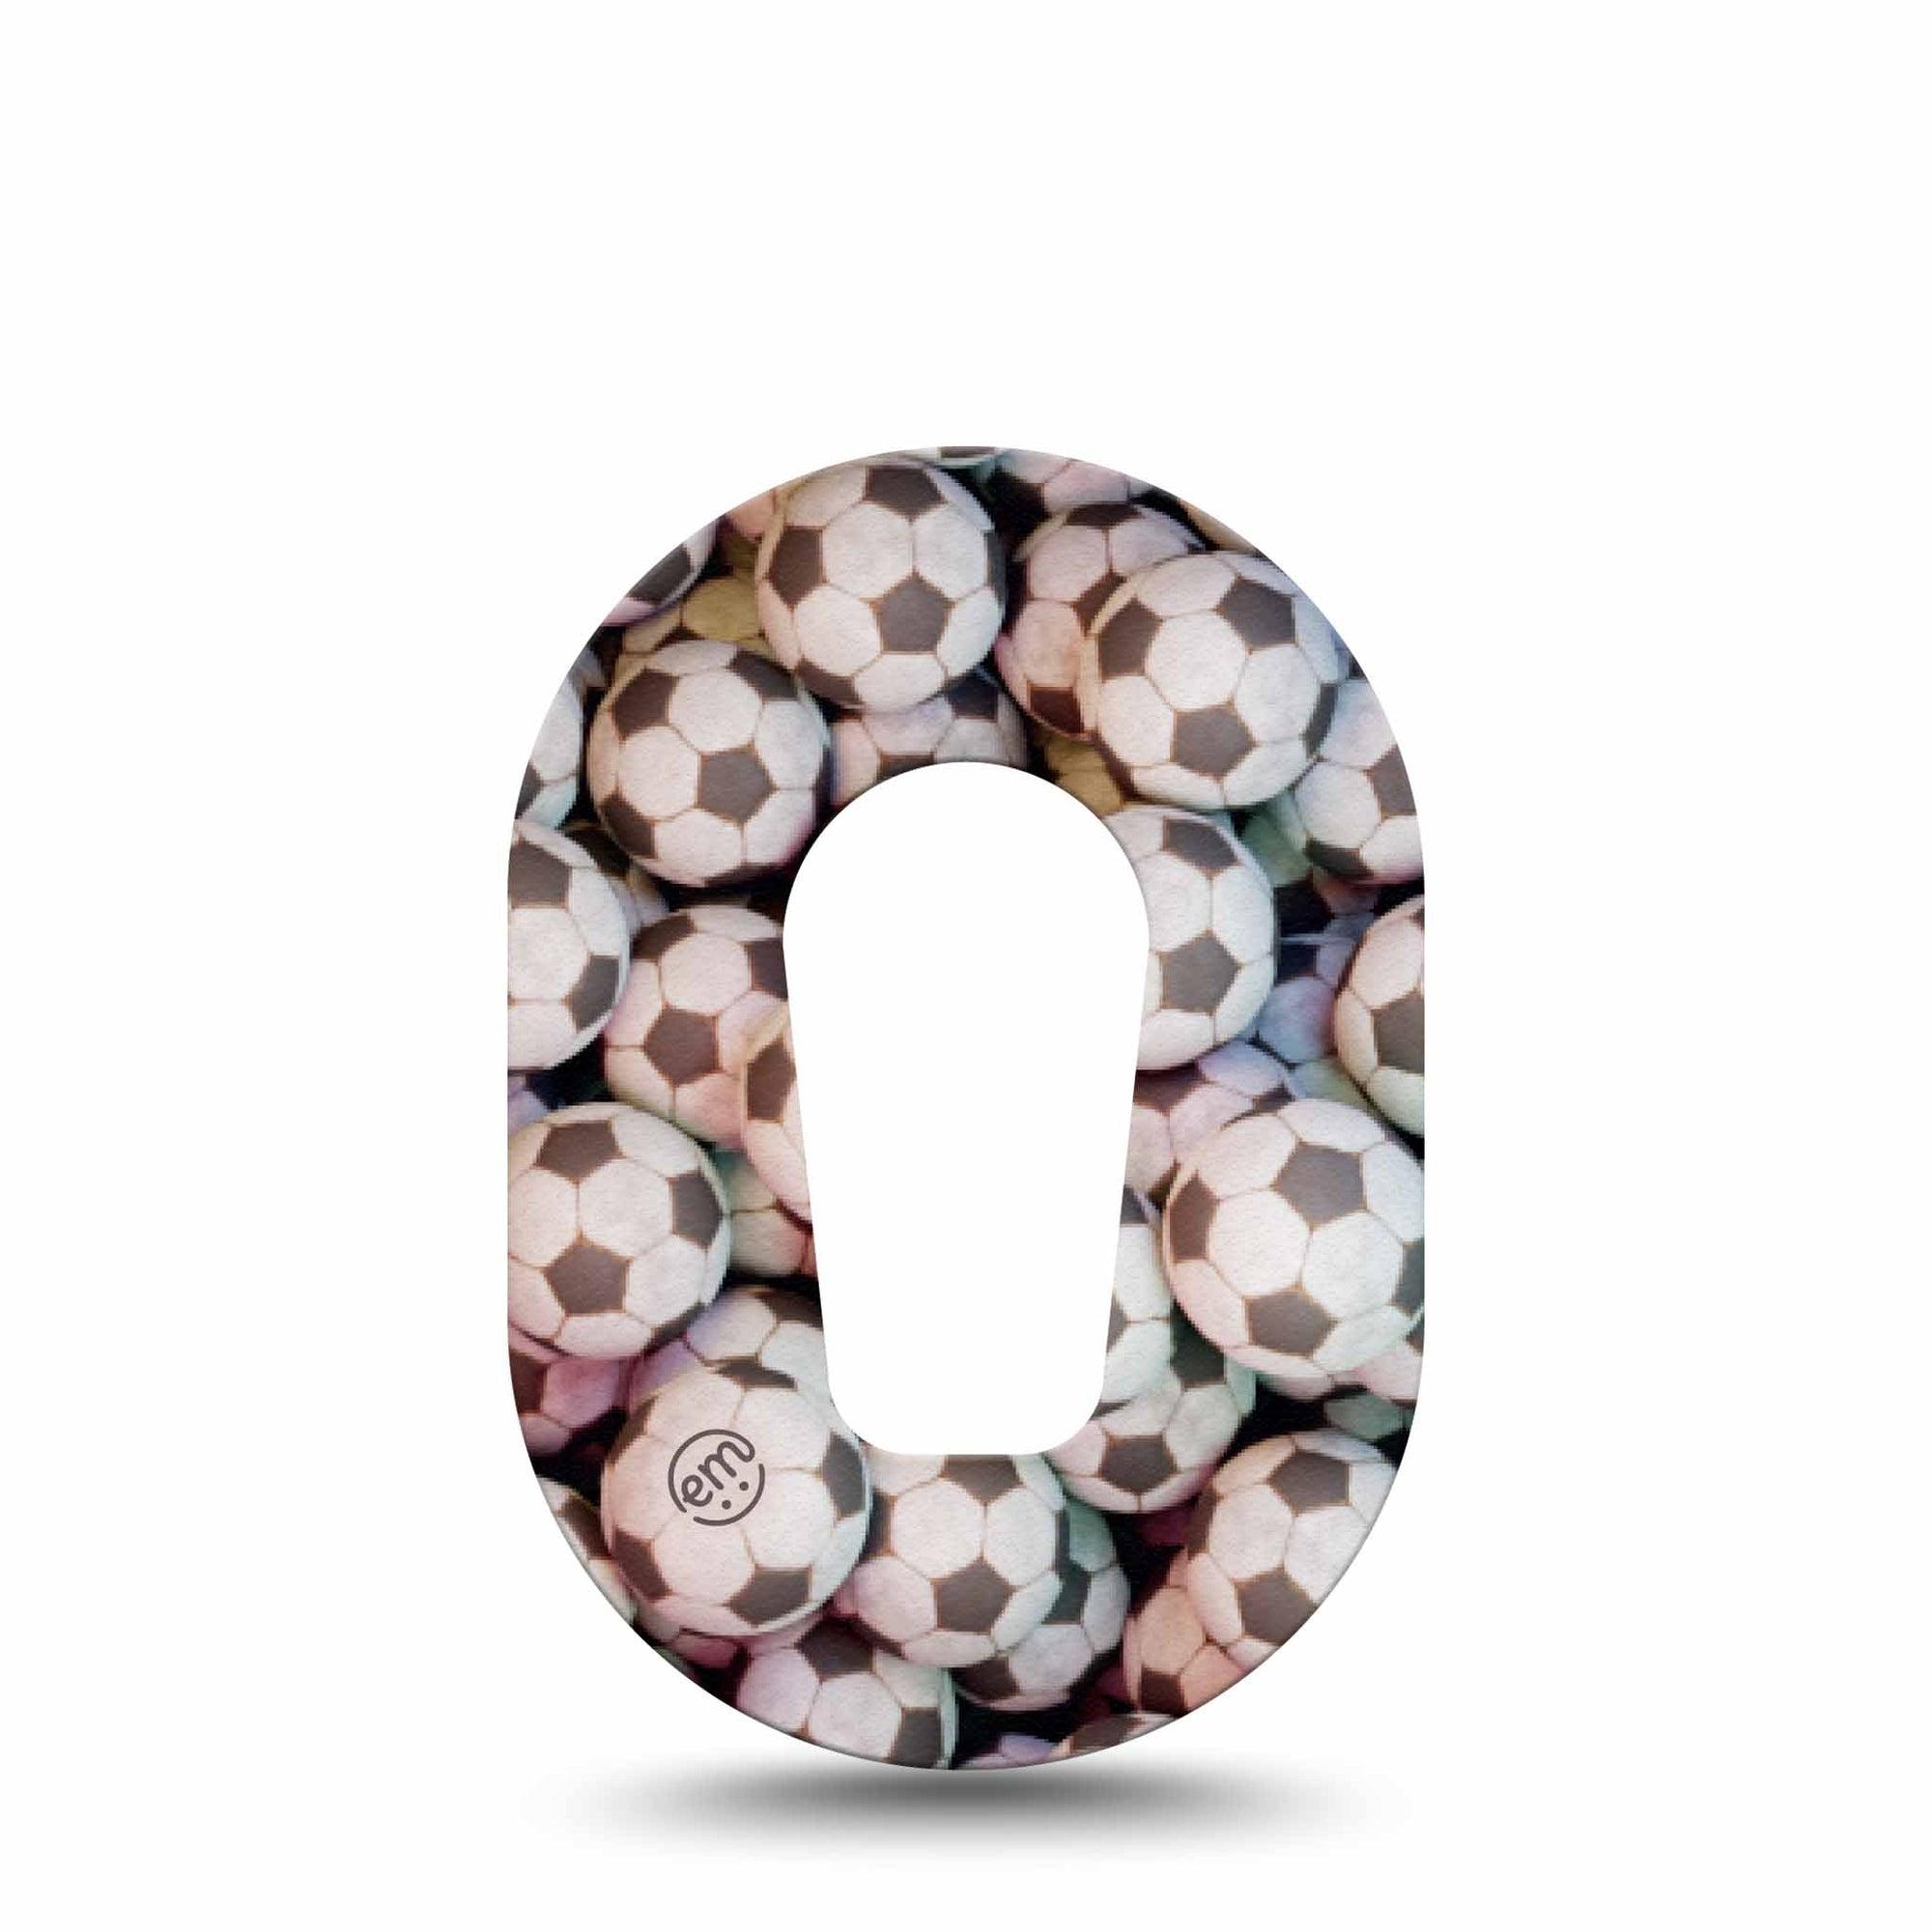 ExpressionMed Soccer Dexcom G6 Mini Tape, Single, Soccer Game Inspired, CGM Plaster Patch Design